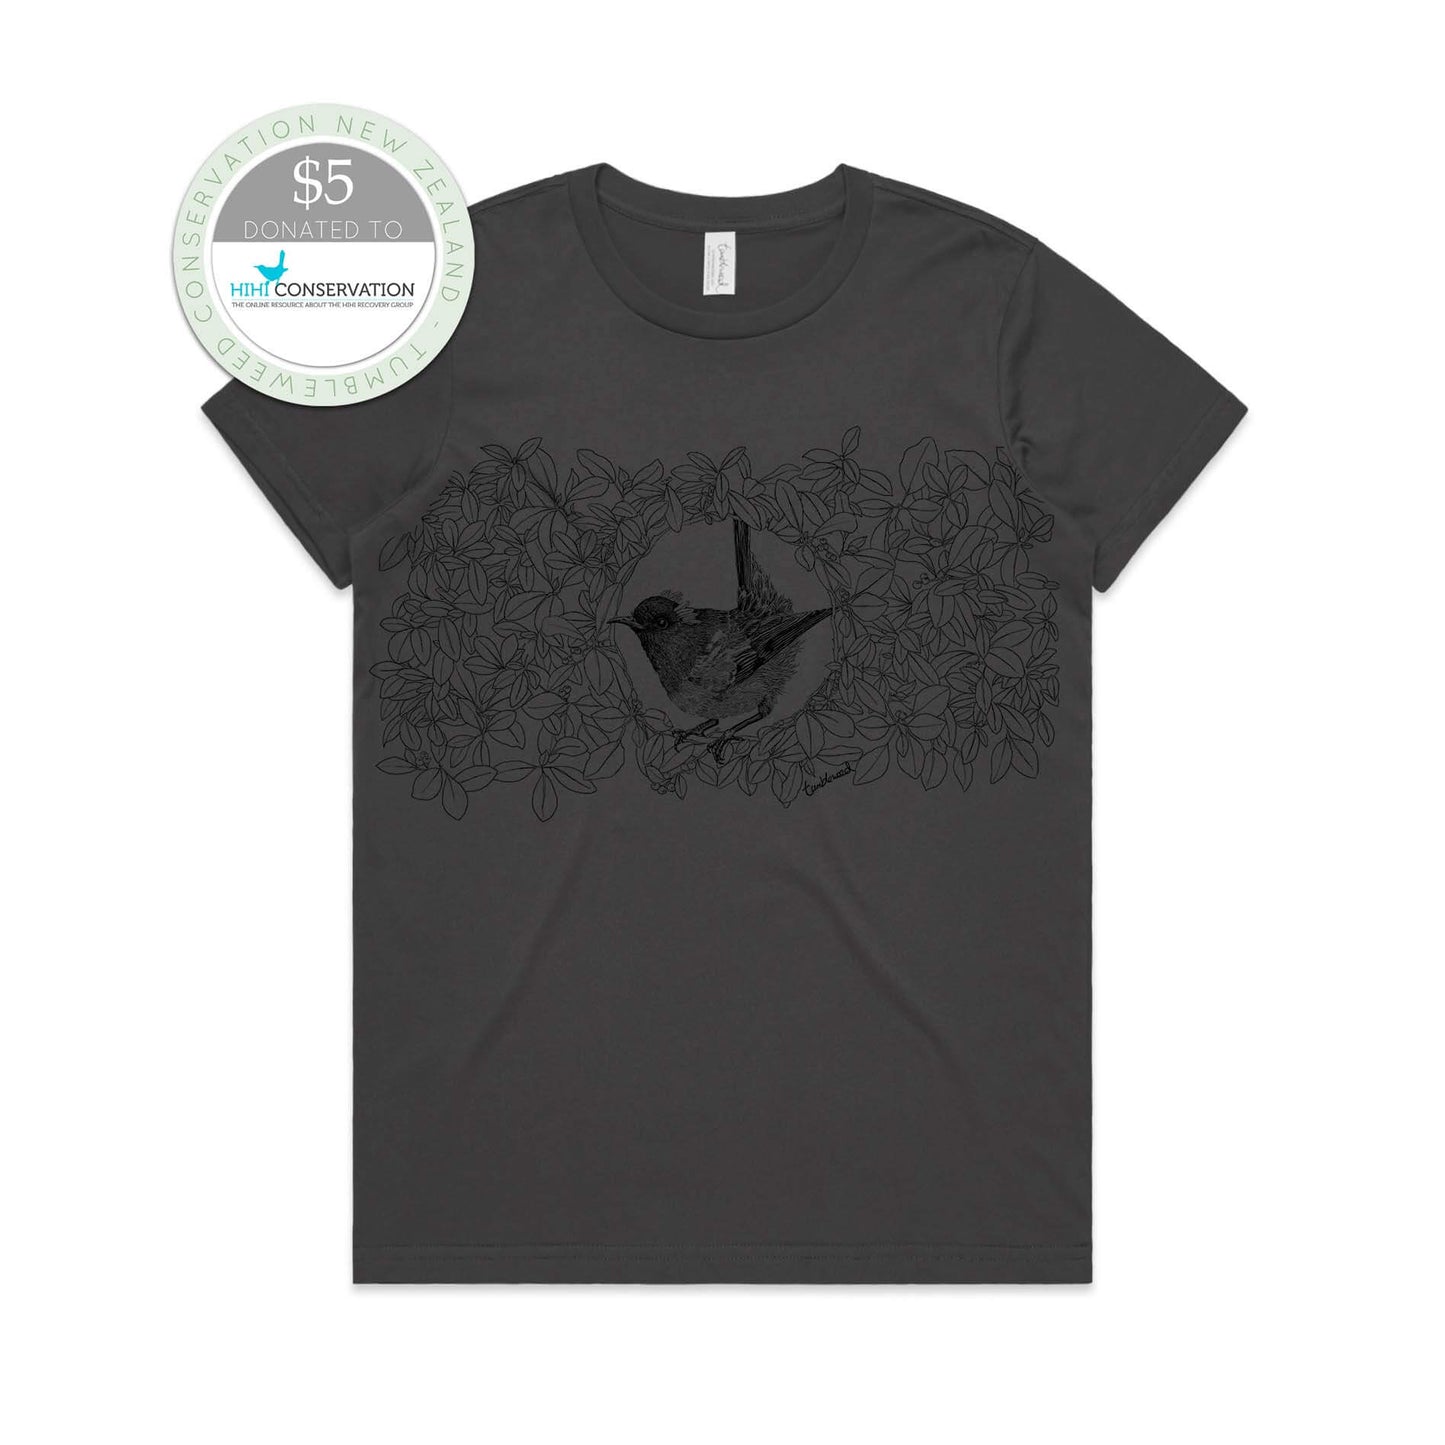 Charcoal, female t-shirt featuring a screen printed Hihi/Stitchbird design.